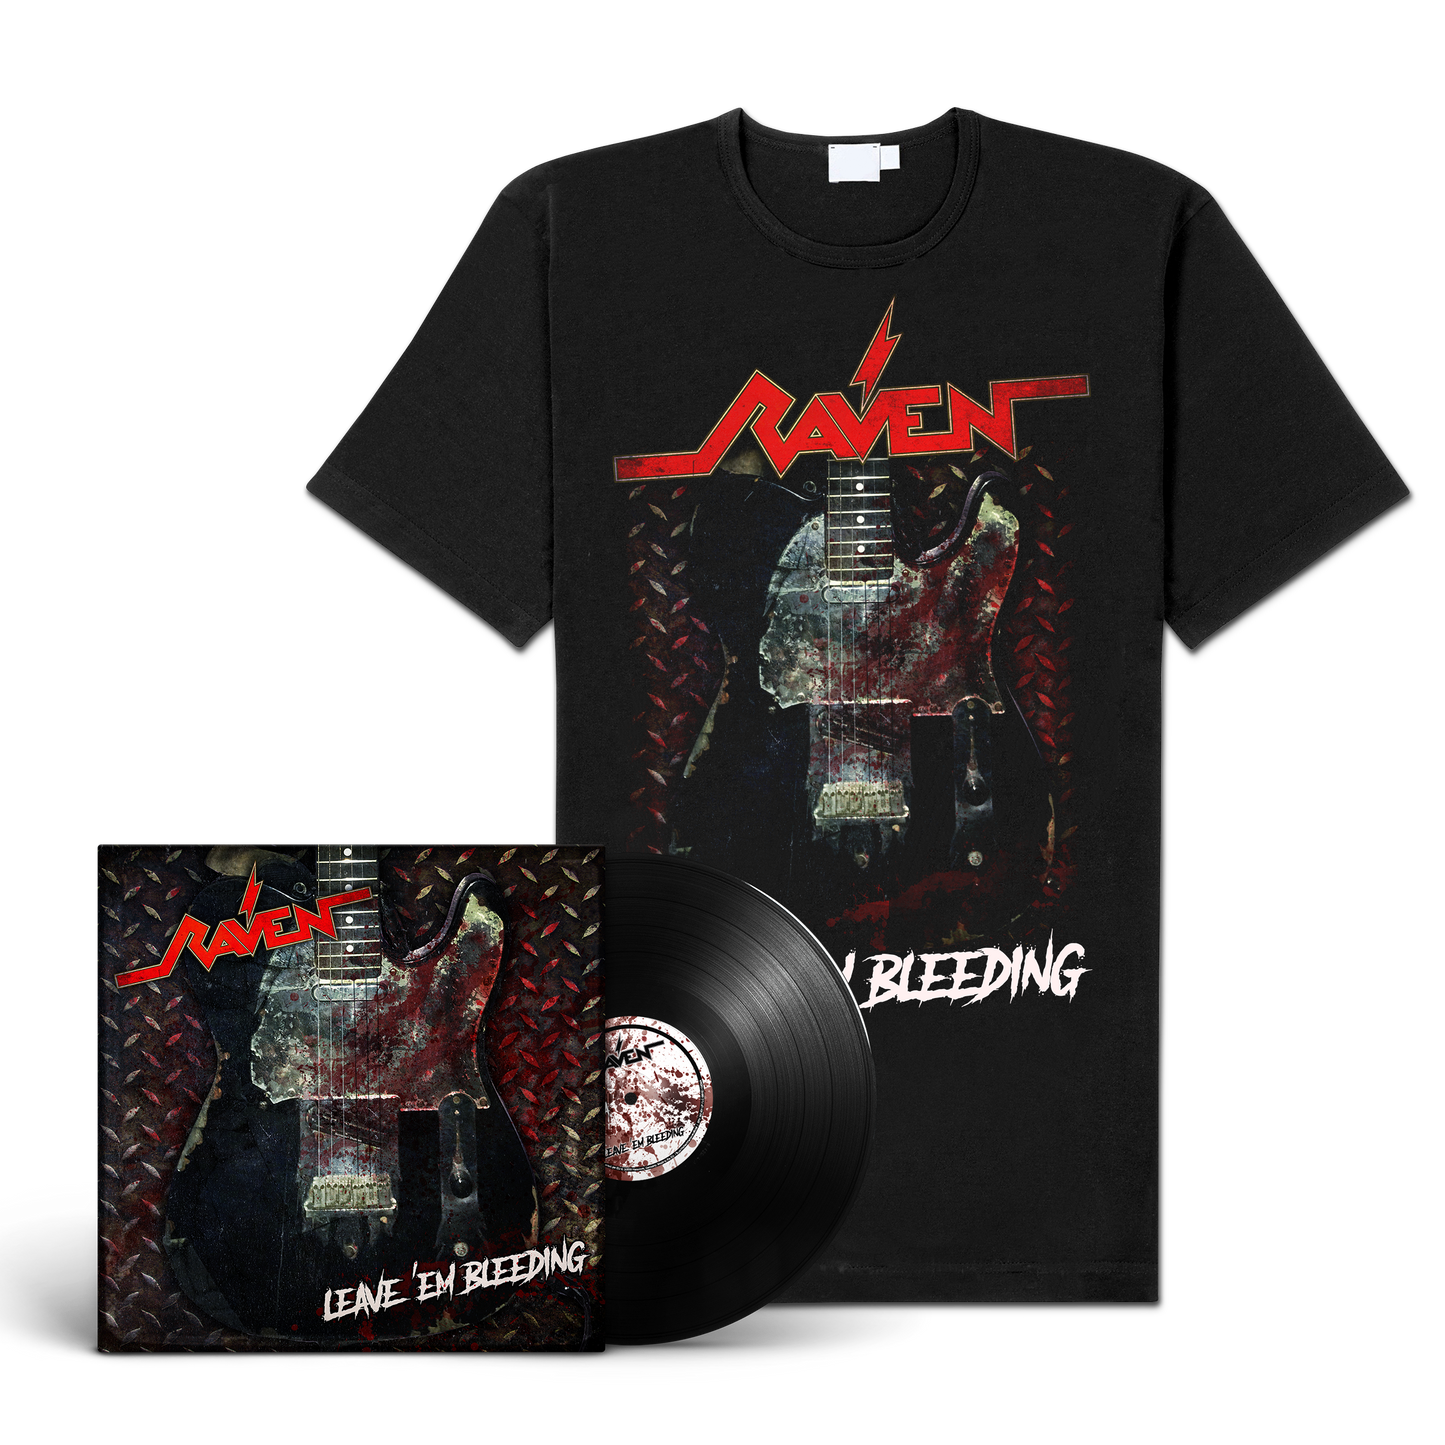 Raven "Leave ‘Em Bleeding" LP-Bundle "Bleeding"